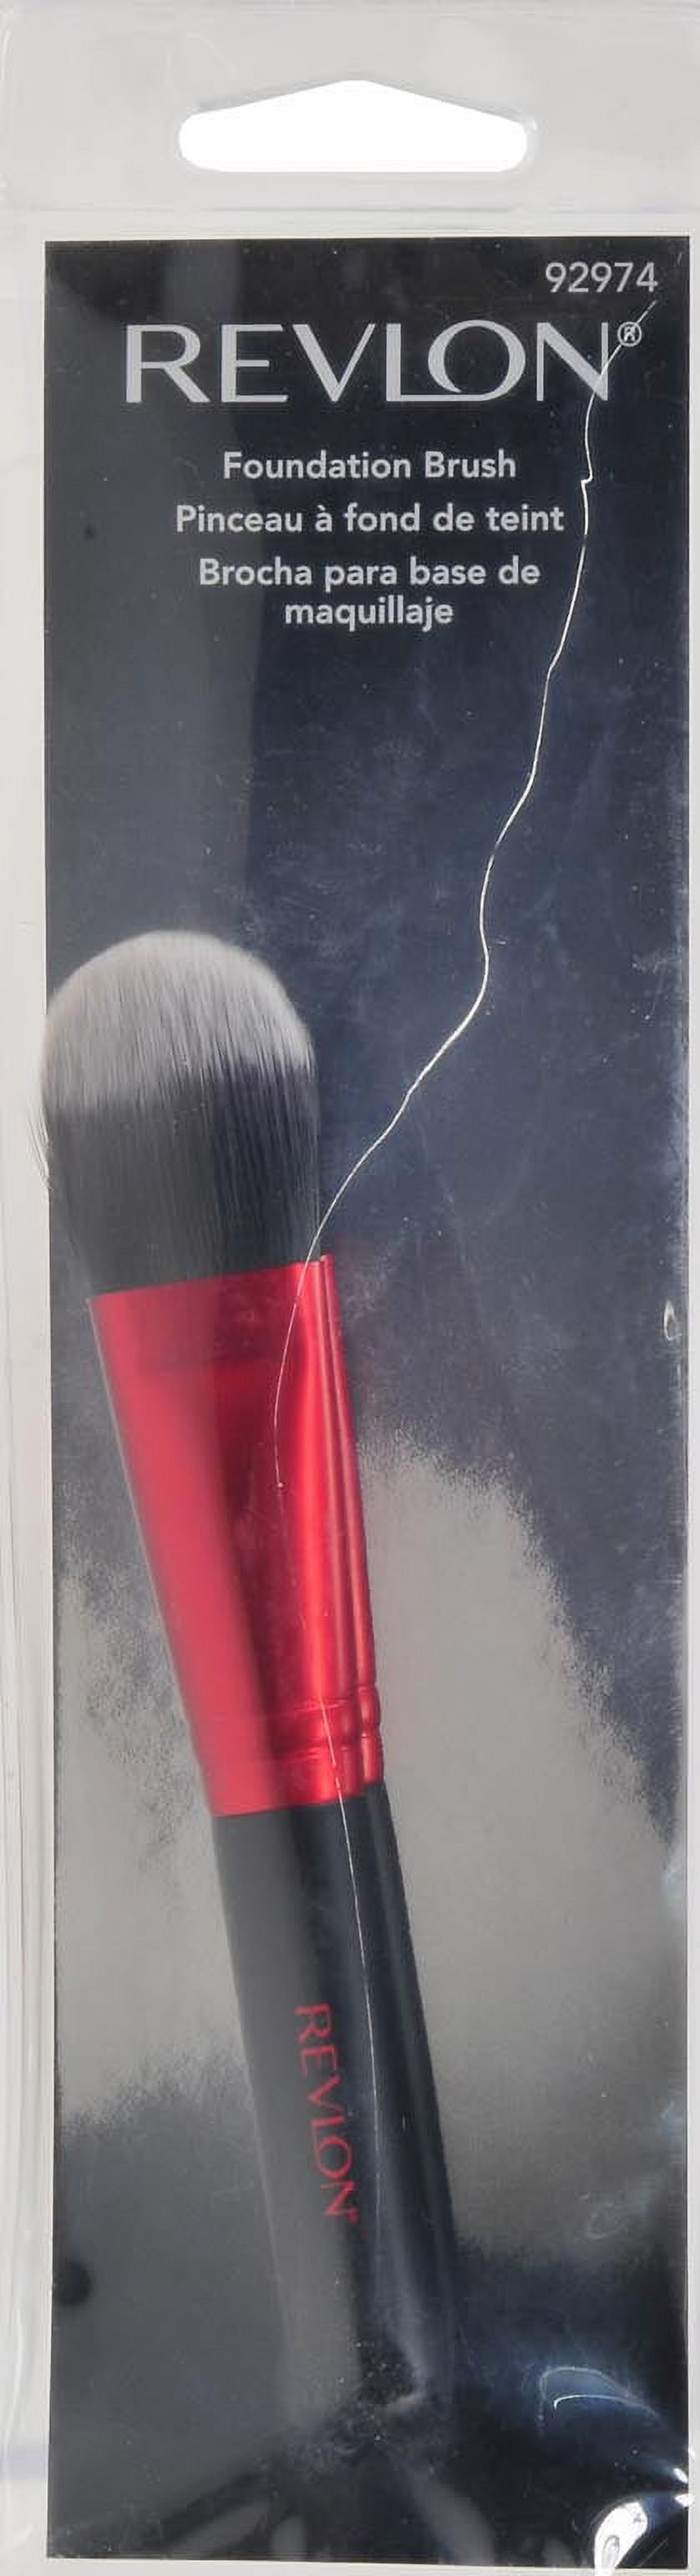 Revlon Foundation Brush, Premium - image 2 of 2